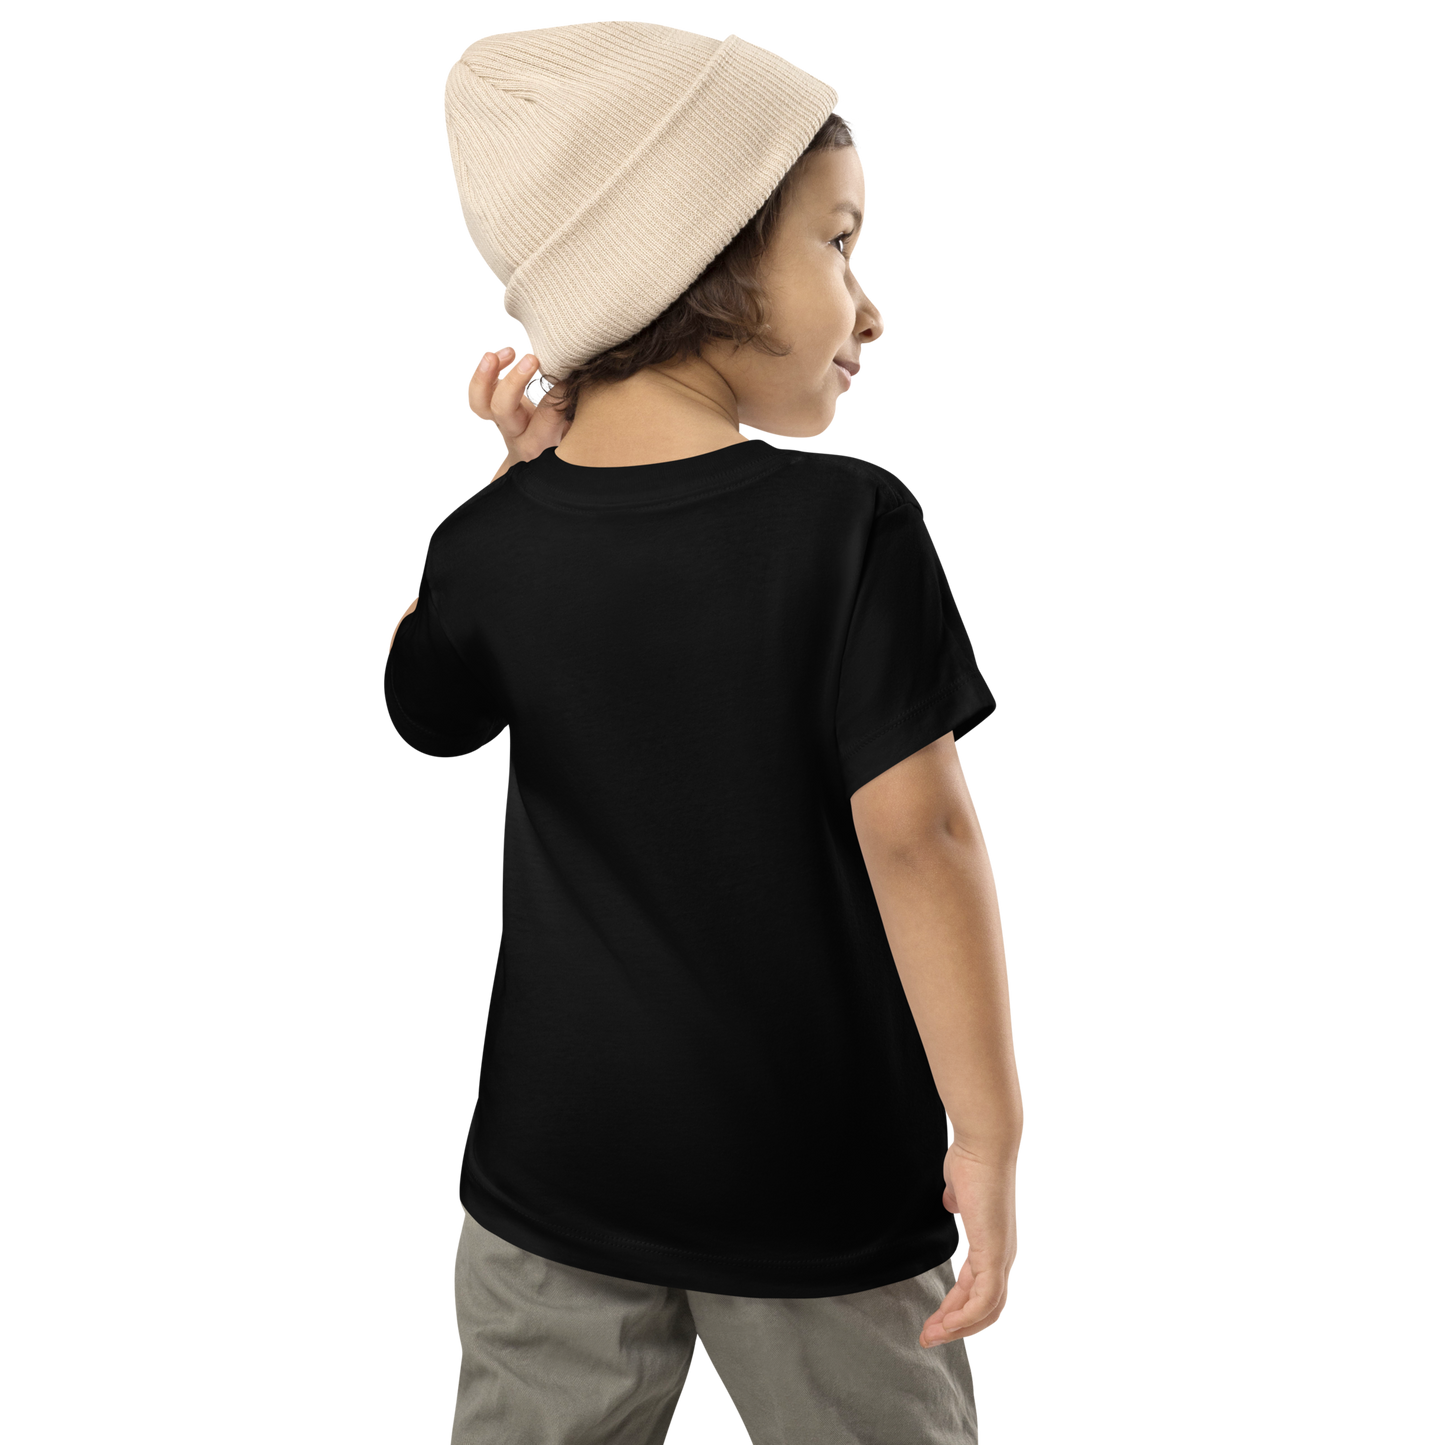 Infantil # VILA // Camiseta Esencial // Unisex - Costa da Morte 💀 Death Coast